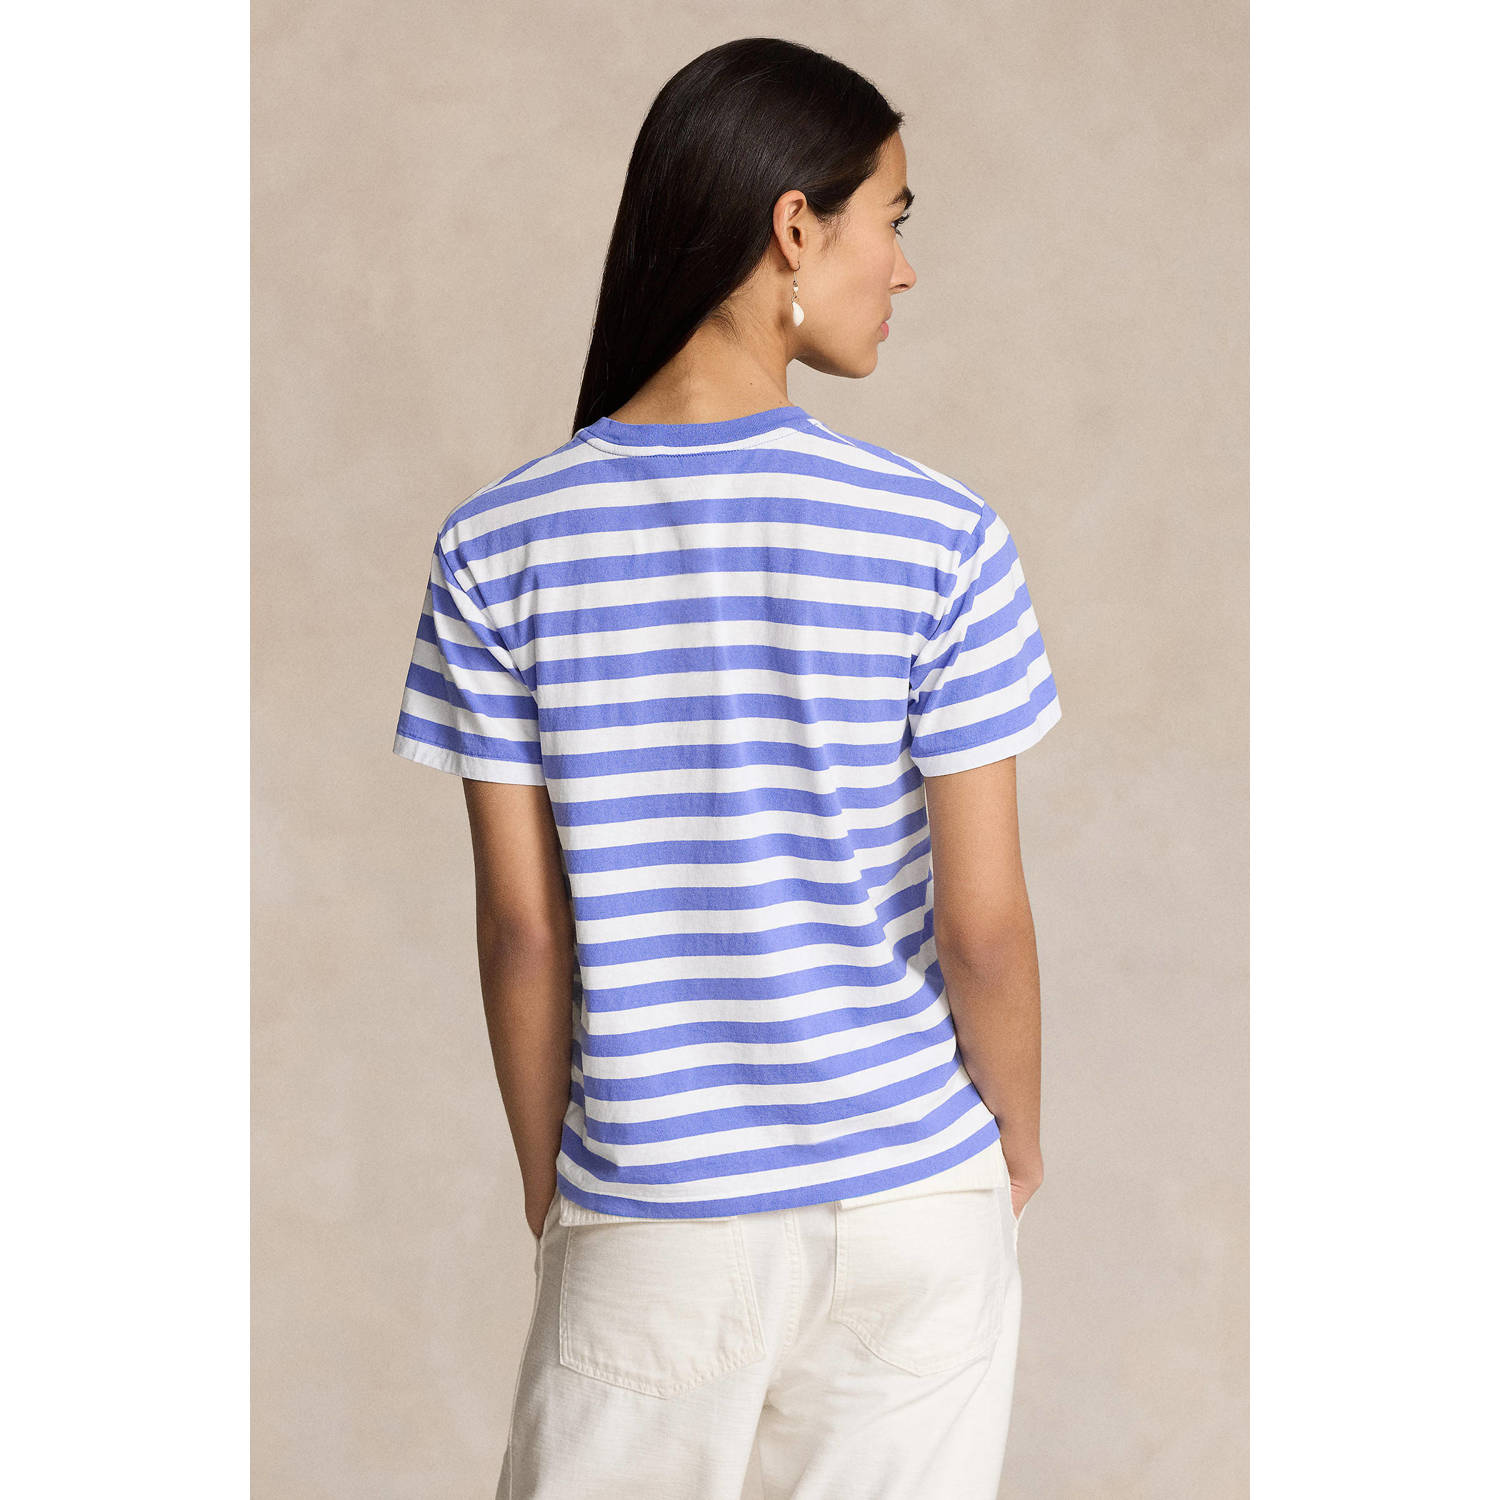 POLO Ralph Lauren gestreept T-shirt blauw wit